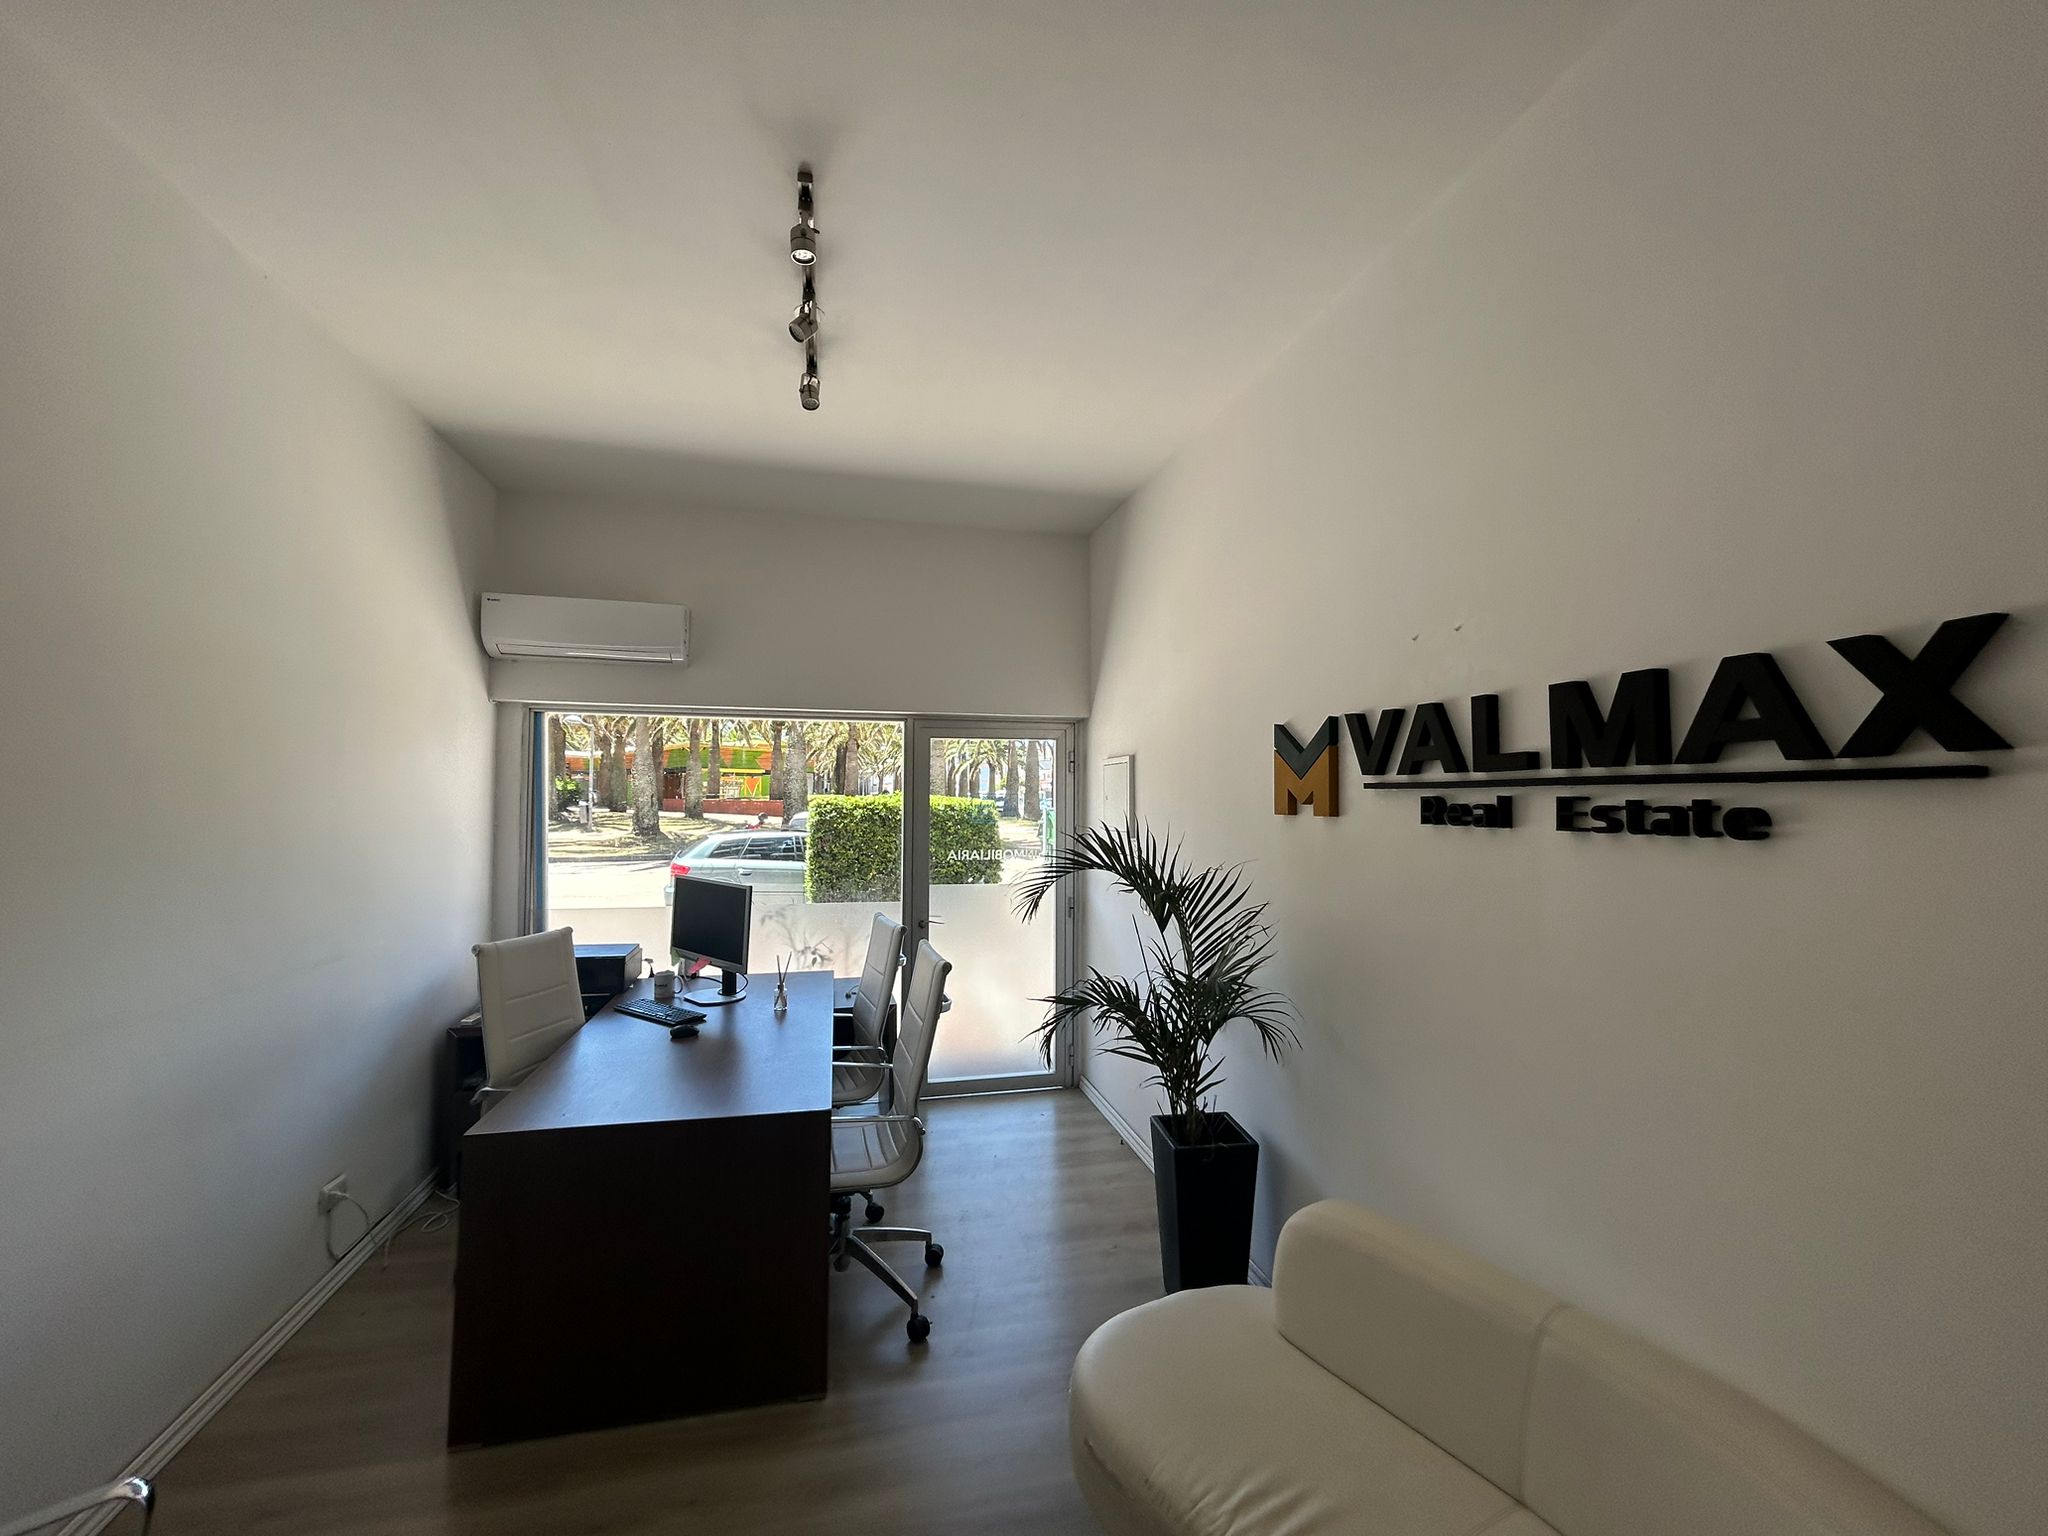 Oficina Valmax Real Estate